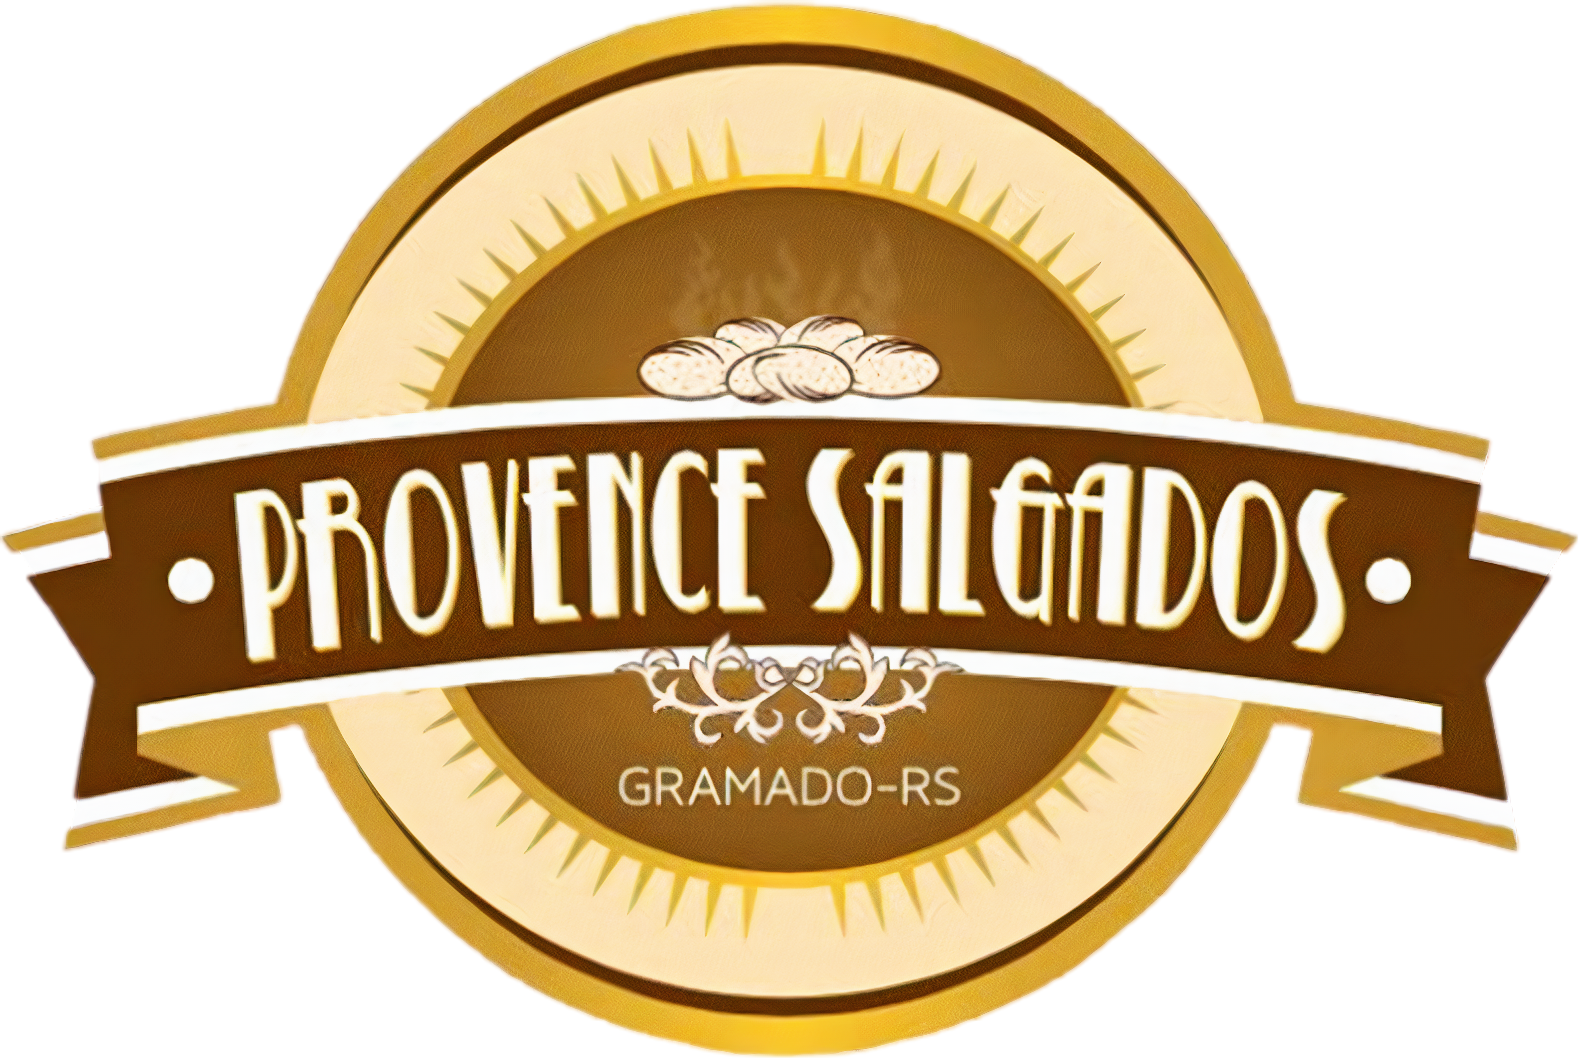 Provence Salgados